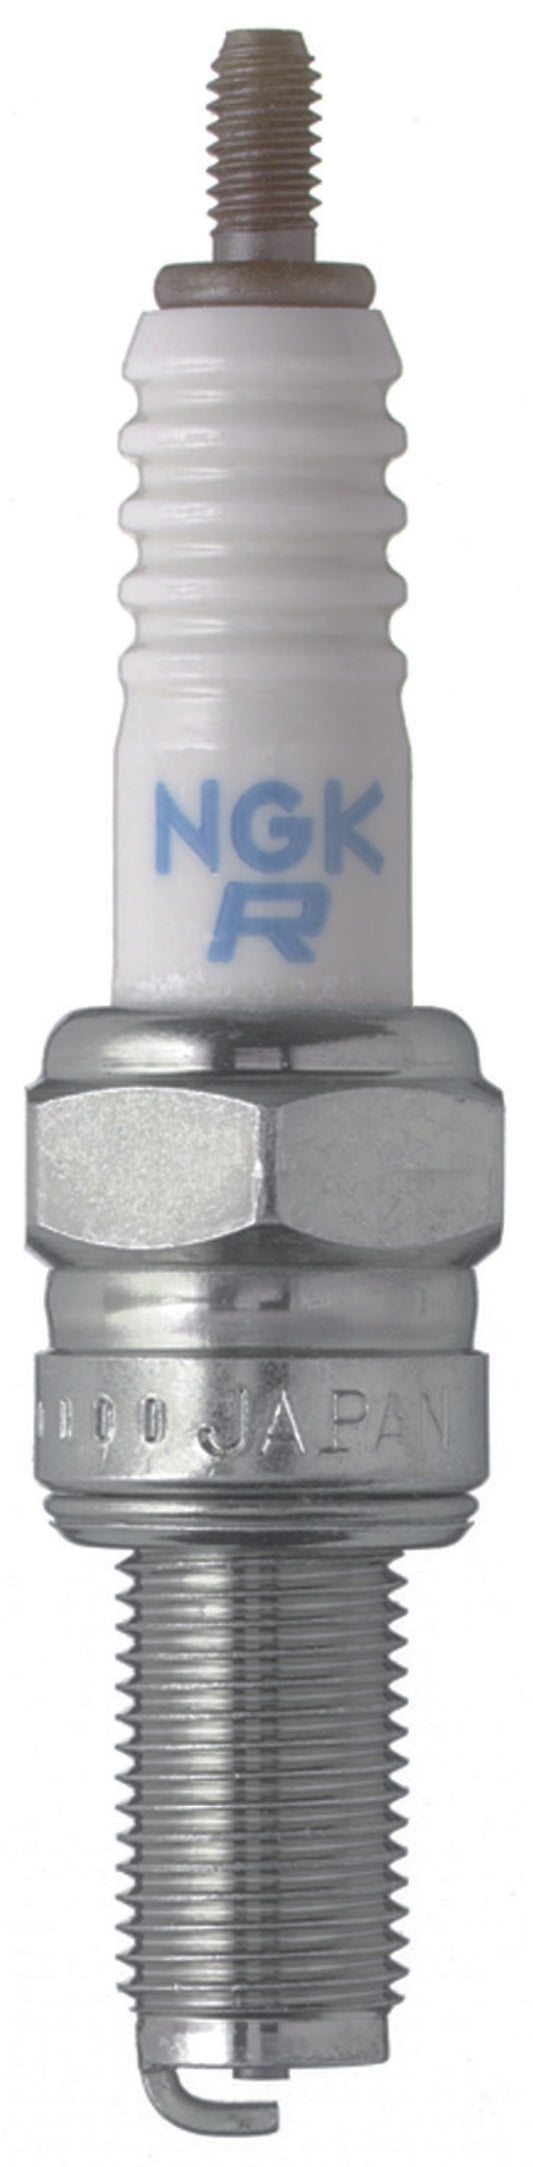 NGK Standard Spark Plug Box of 4 (CR6E)